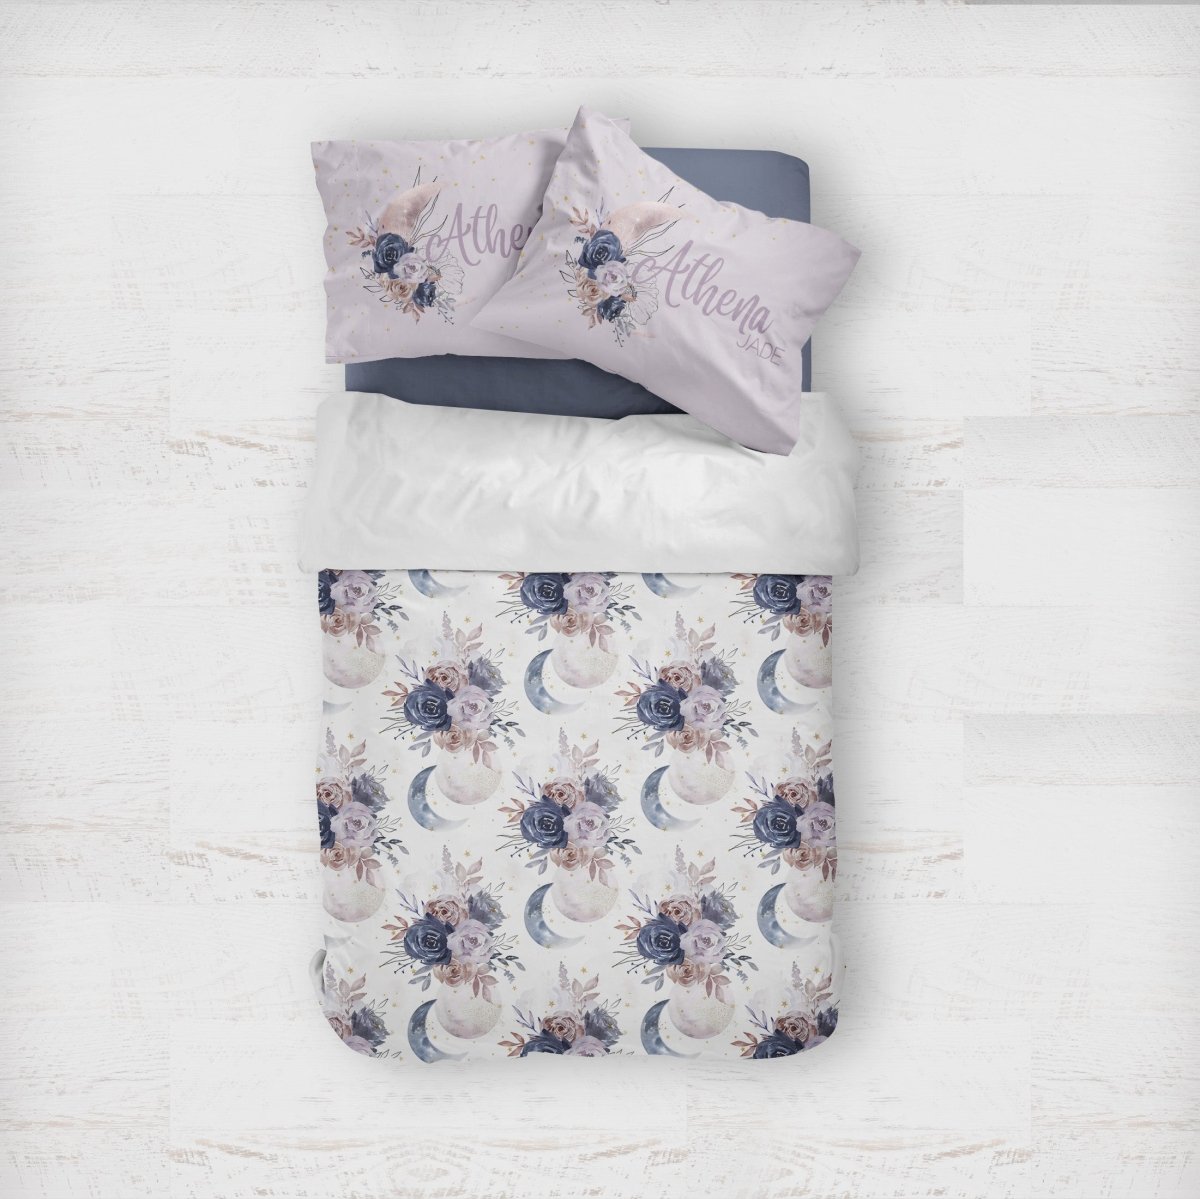 Floral Moon Personalized Kids Bedding Set (Comforter or Duvet Cover) - Floral Moon, gender_girl, text